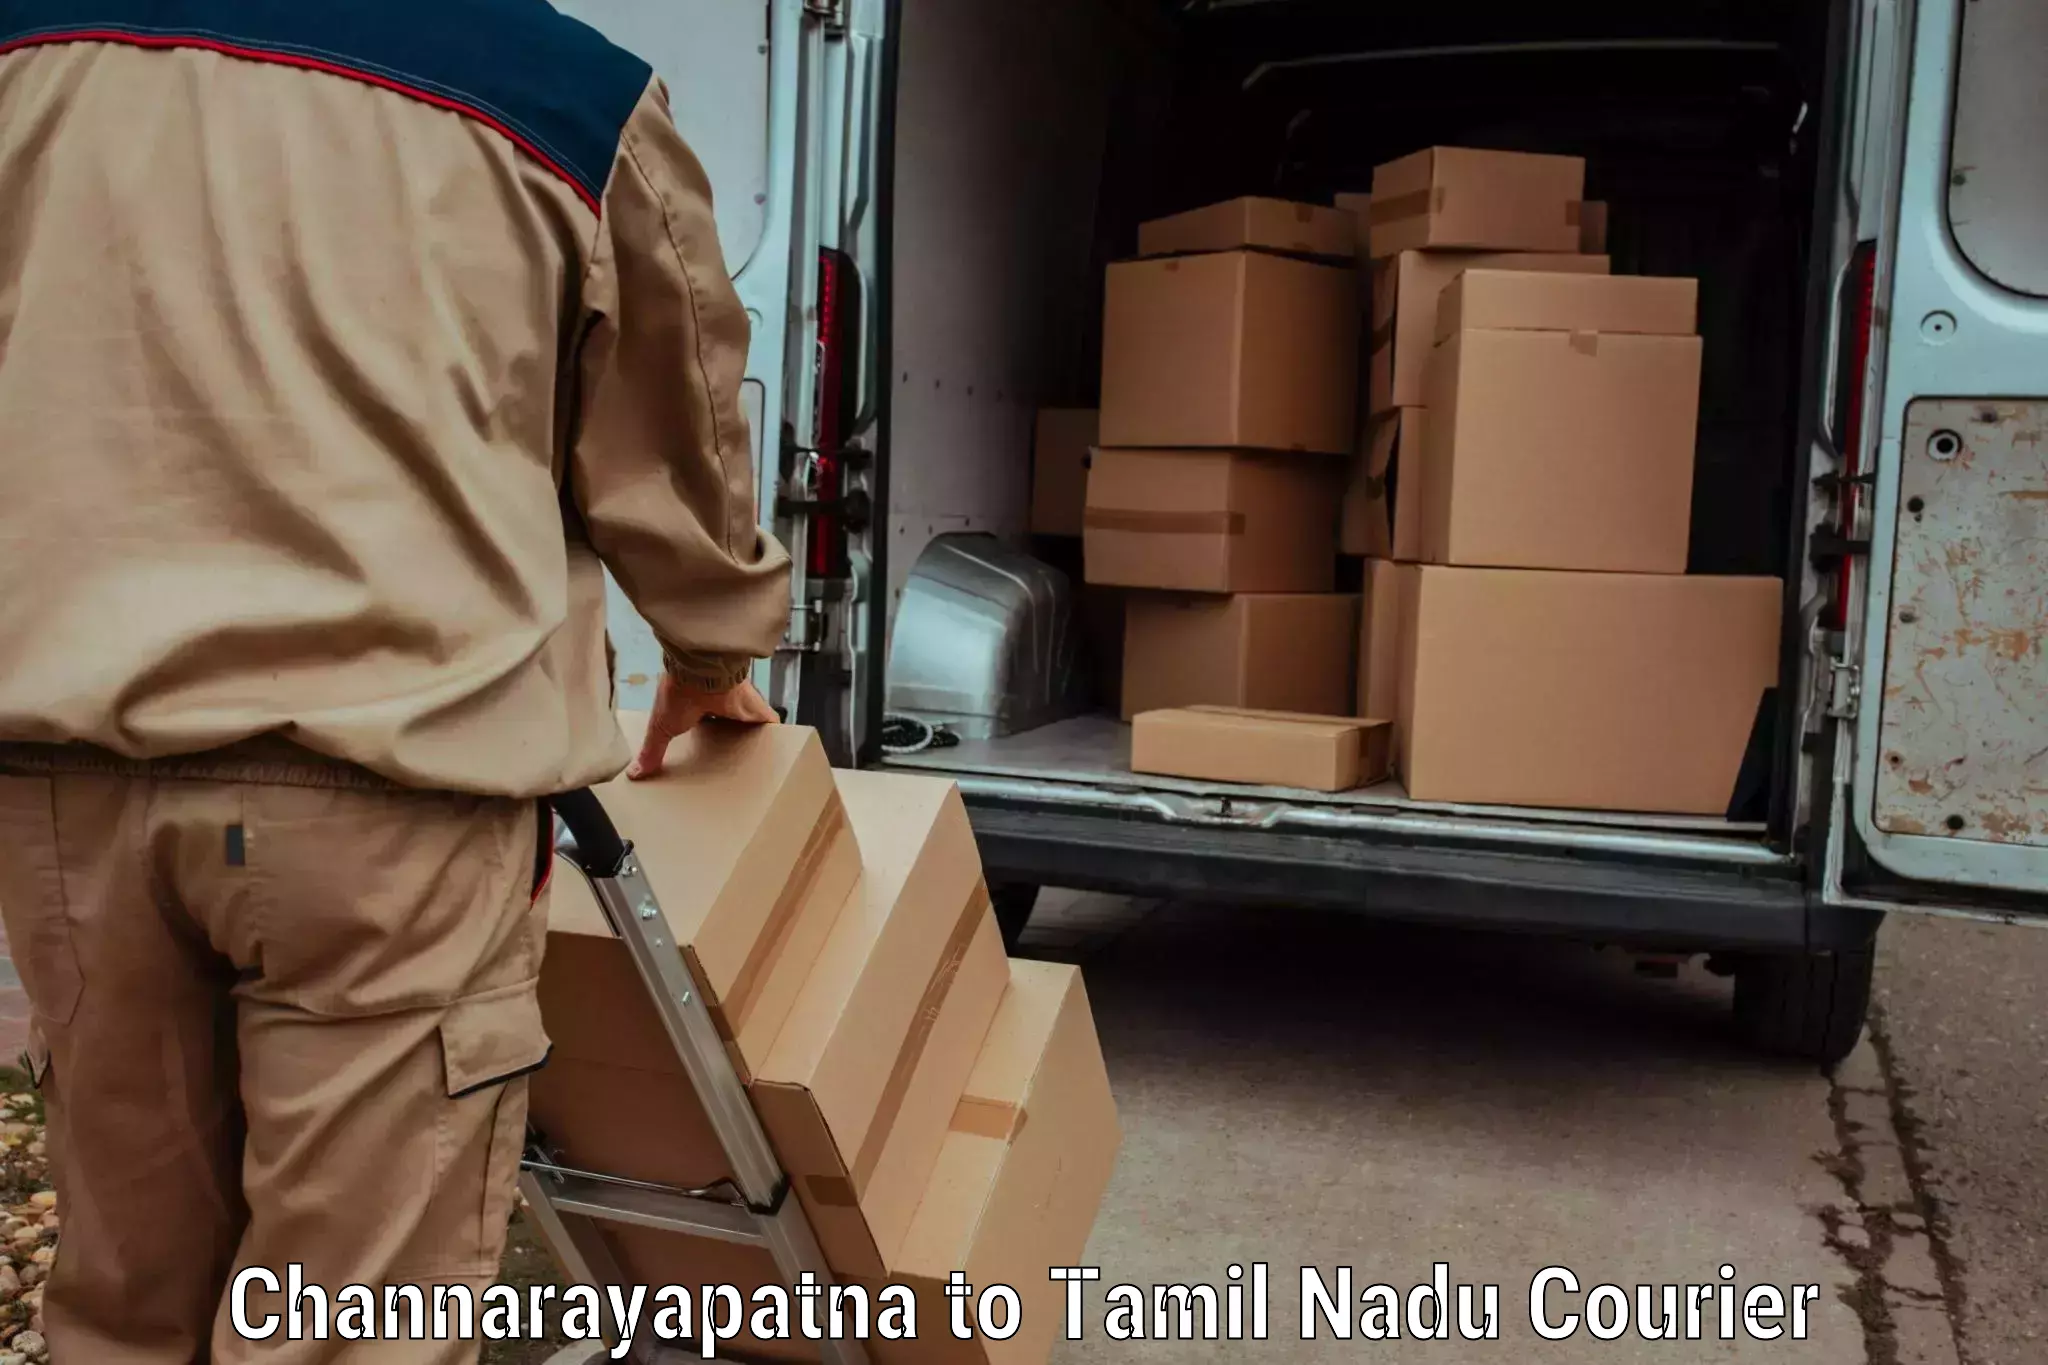 Reliable package handling Channarayapatna to Pennagaram